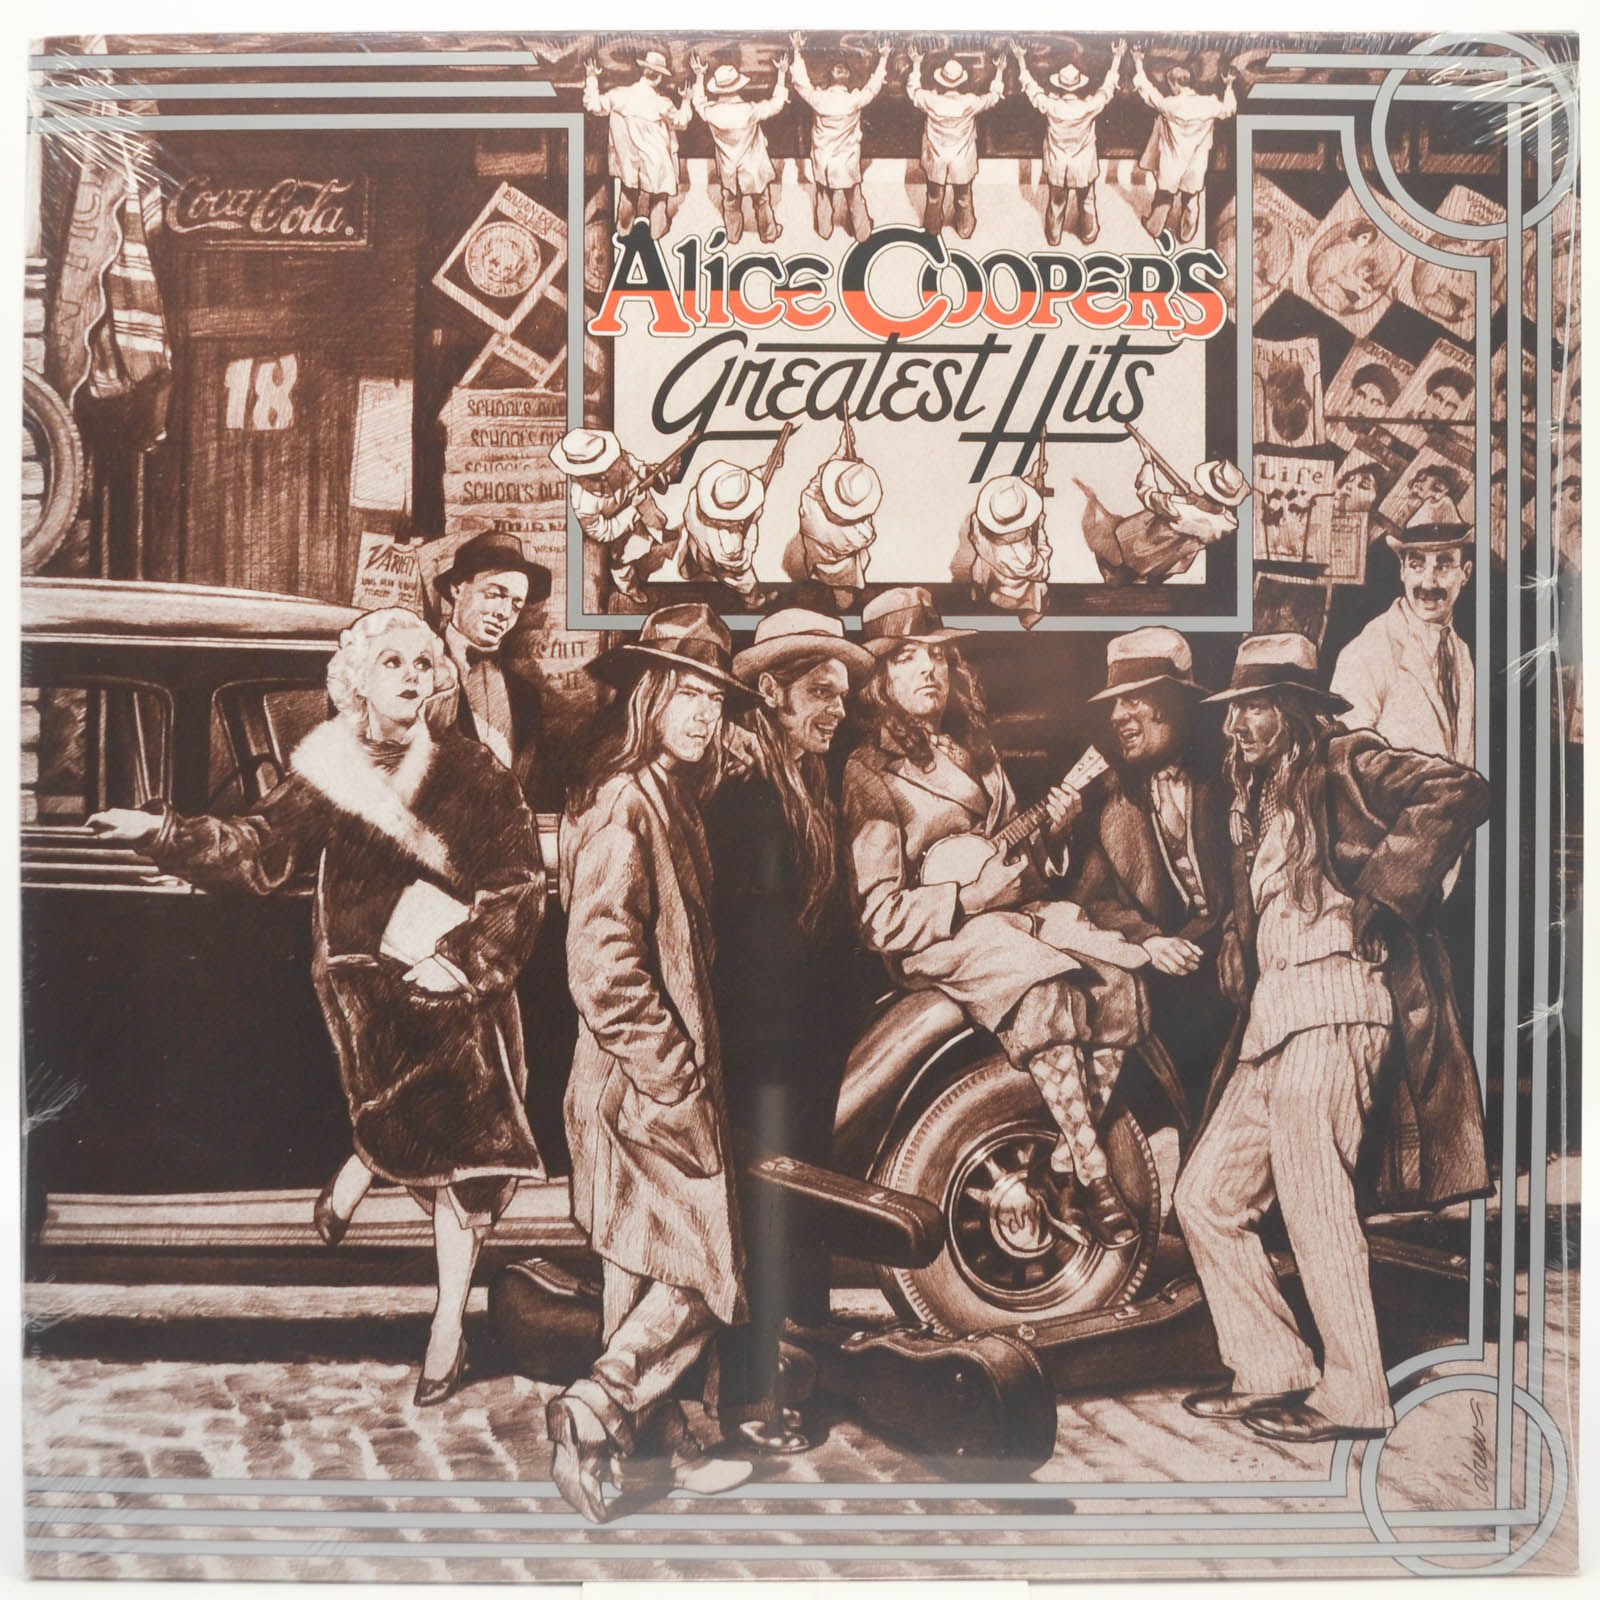 Alice Cooper — Alice Cooper's Greatest Hits, 1974